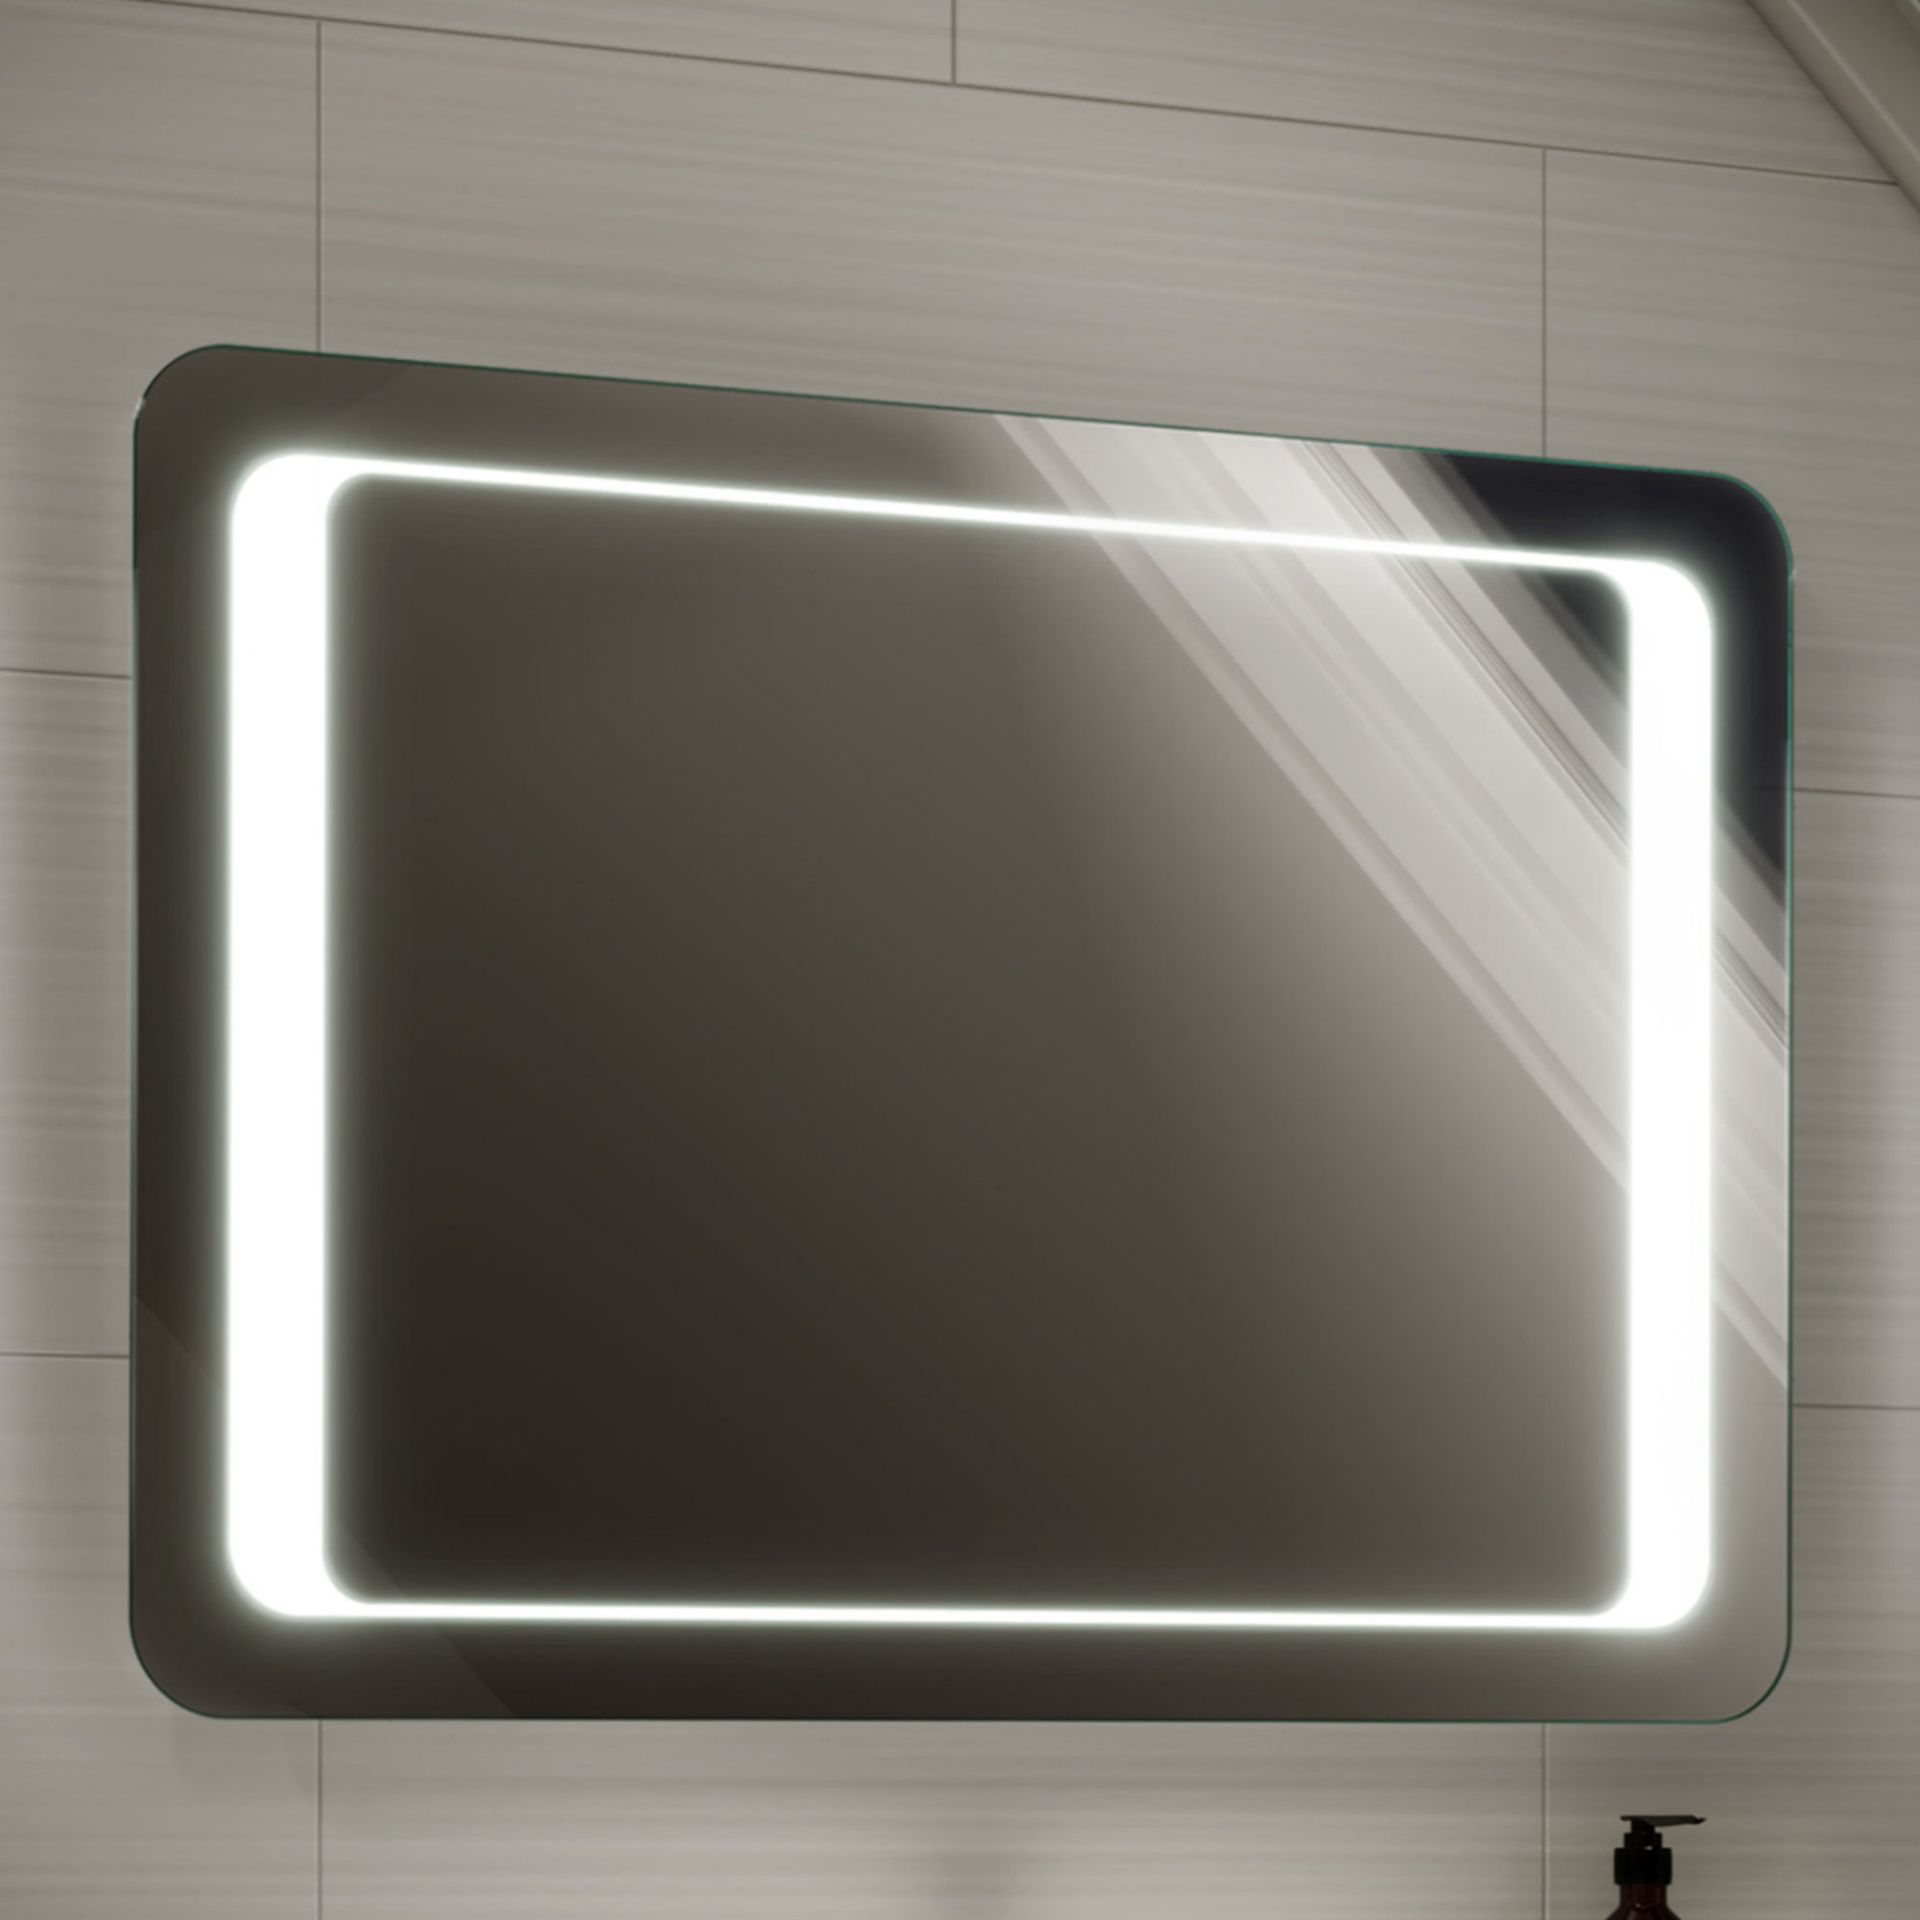 (WG288) 600x800mm Quasar Illuminated LED Mirror. RRP £349.99. Energy efficient LED lighting with